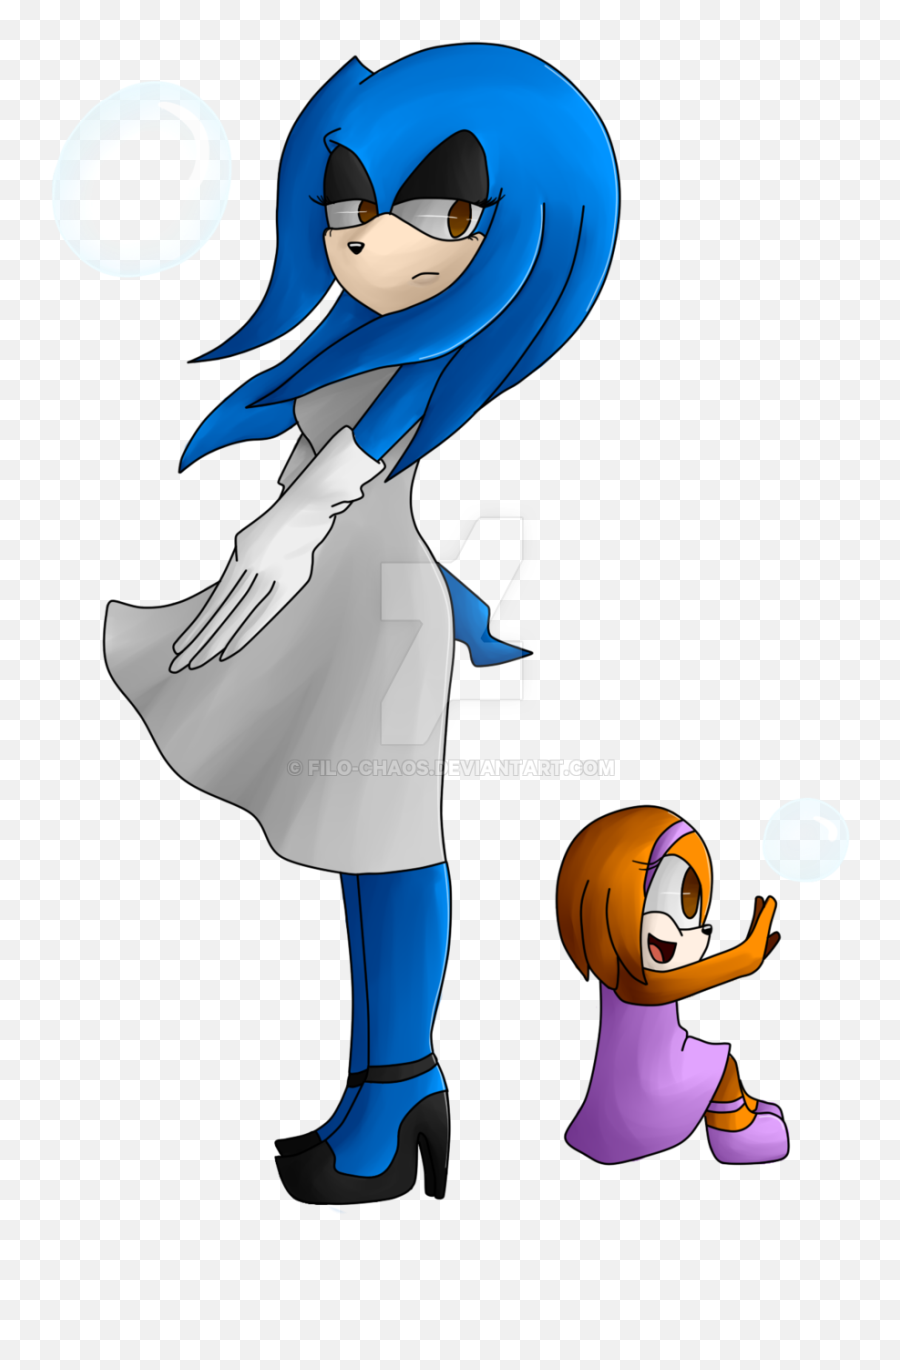 Eviantart Com 0 Sonic The Hedgehog 3 Cartoon Man Vertebrate - Male Sonic Echidna Oc Png,Sonic The Hedgehog 3 Logo